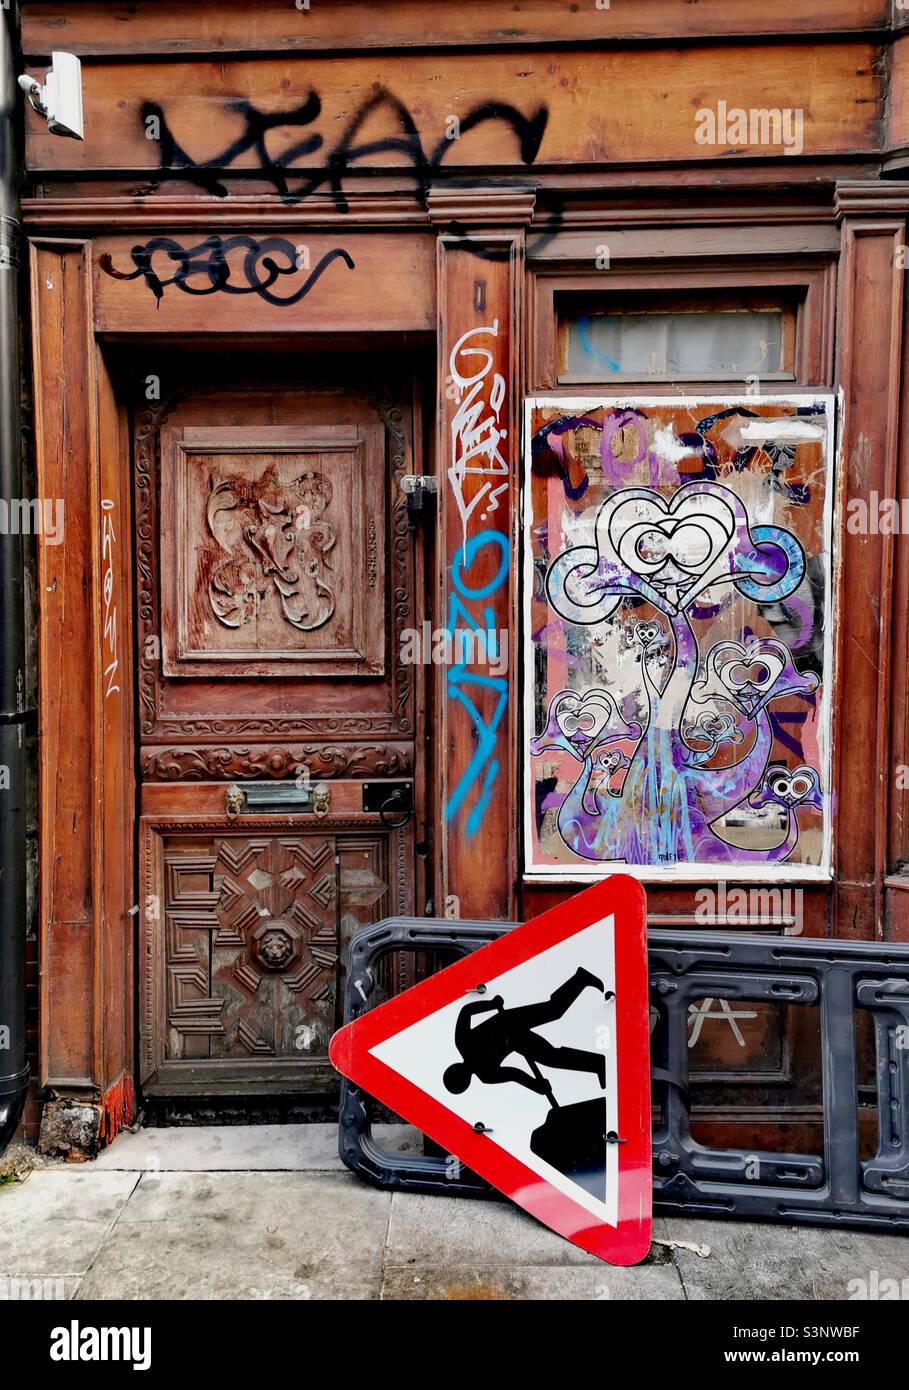 graffiti in abandoned doorway London Stock Photo